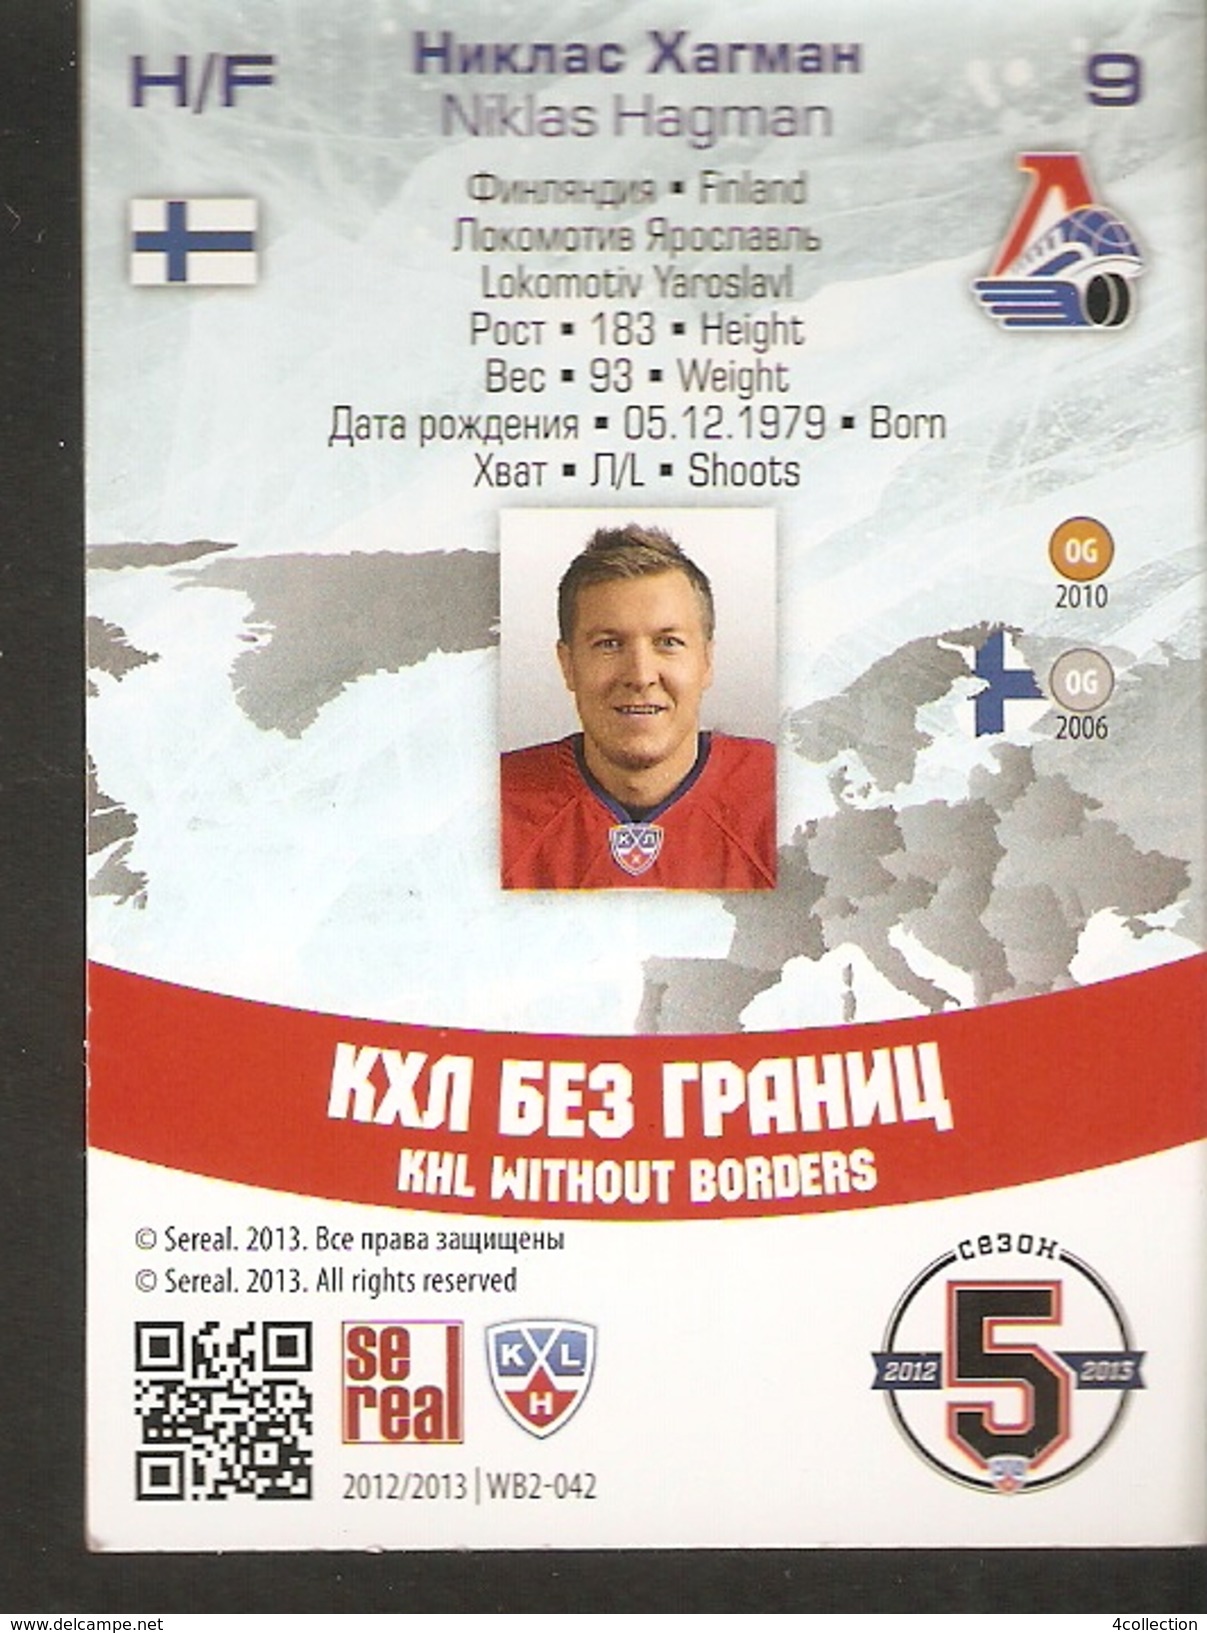 Hockey Sport Collectibles KHL Se Real Card NIKLAS HAGMAN H/F #9 Finland LOKOMOTIV Yaroslavl 5th Season 2012-2013 - 2000-Heute